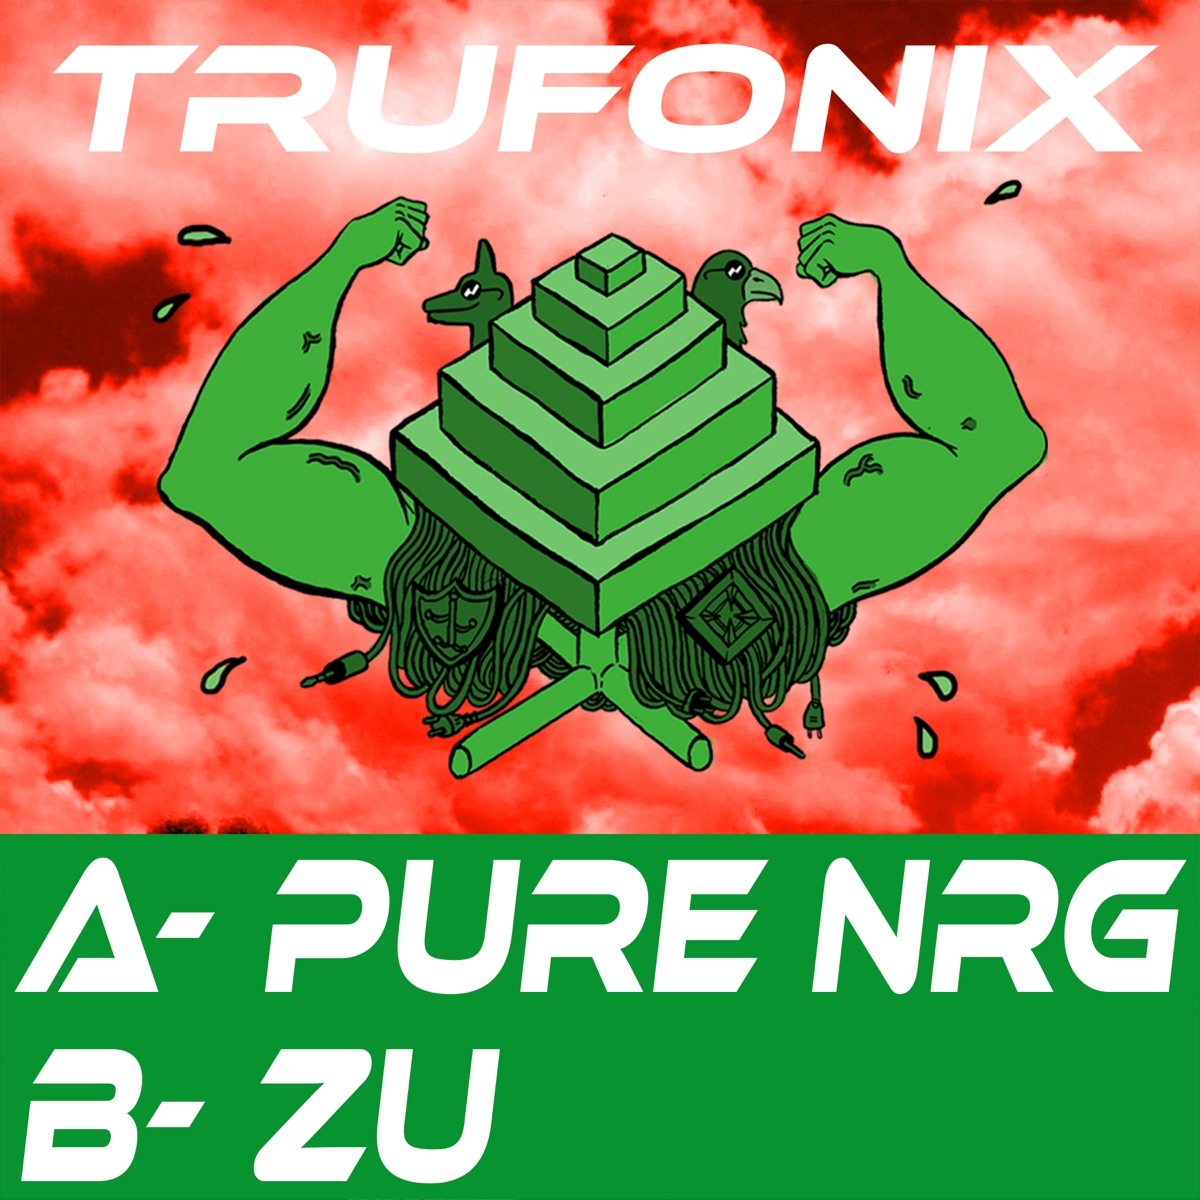 Pure Nrg - Single - Album by Tru Fonix - Apple Music